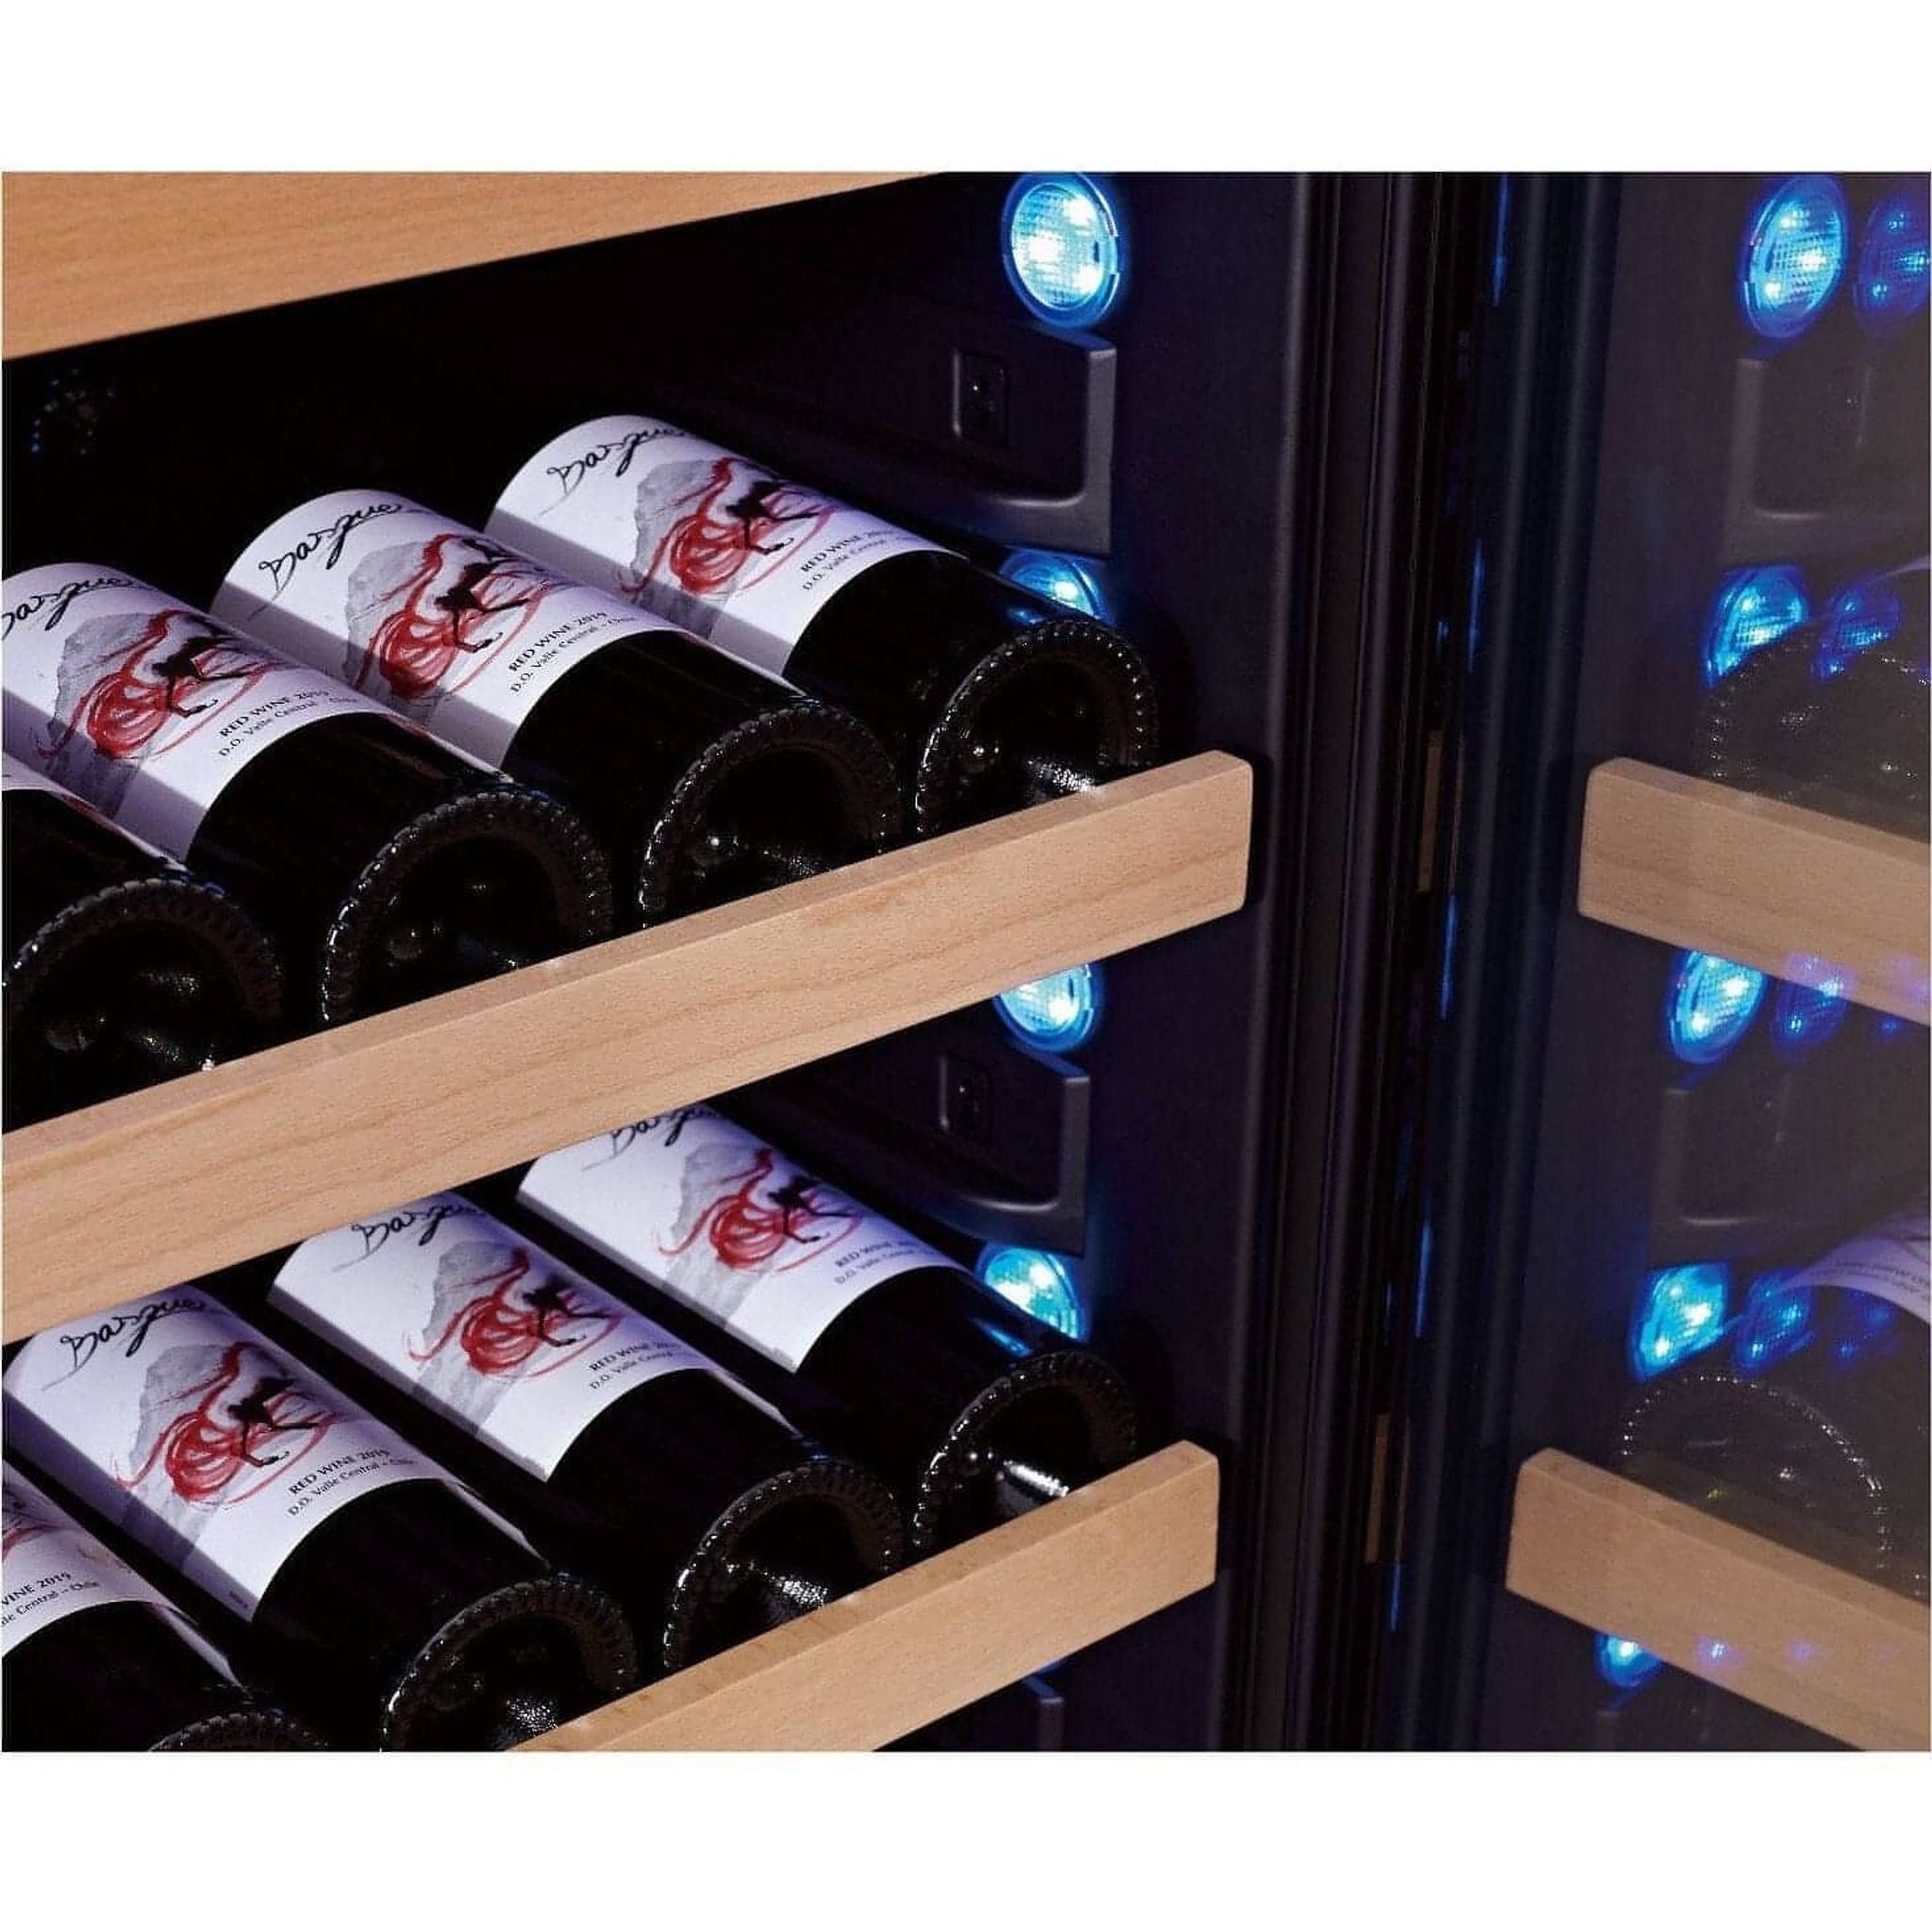 SWISSCAVE Premium - 600mm - 47 Bottle Wine Cooler - WLB-160F